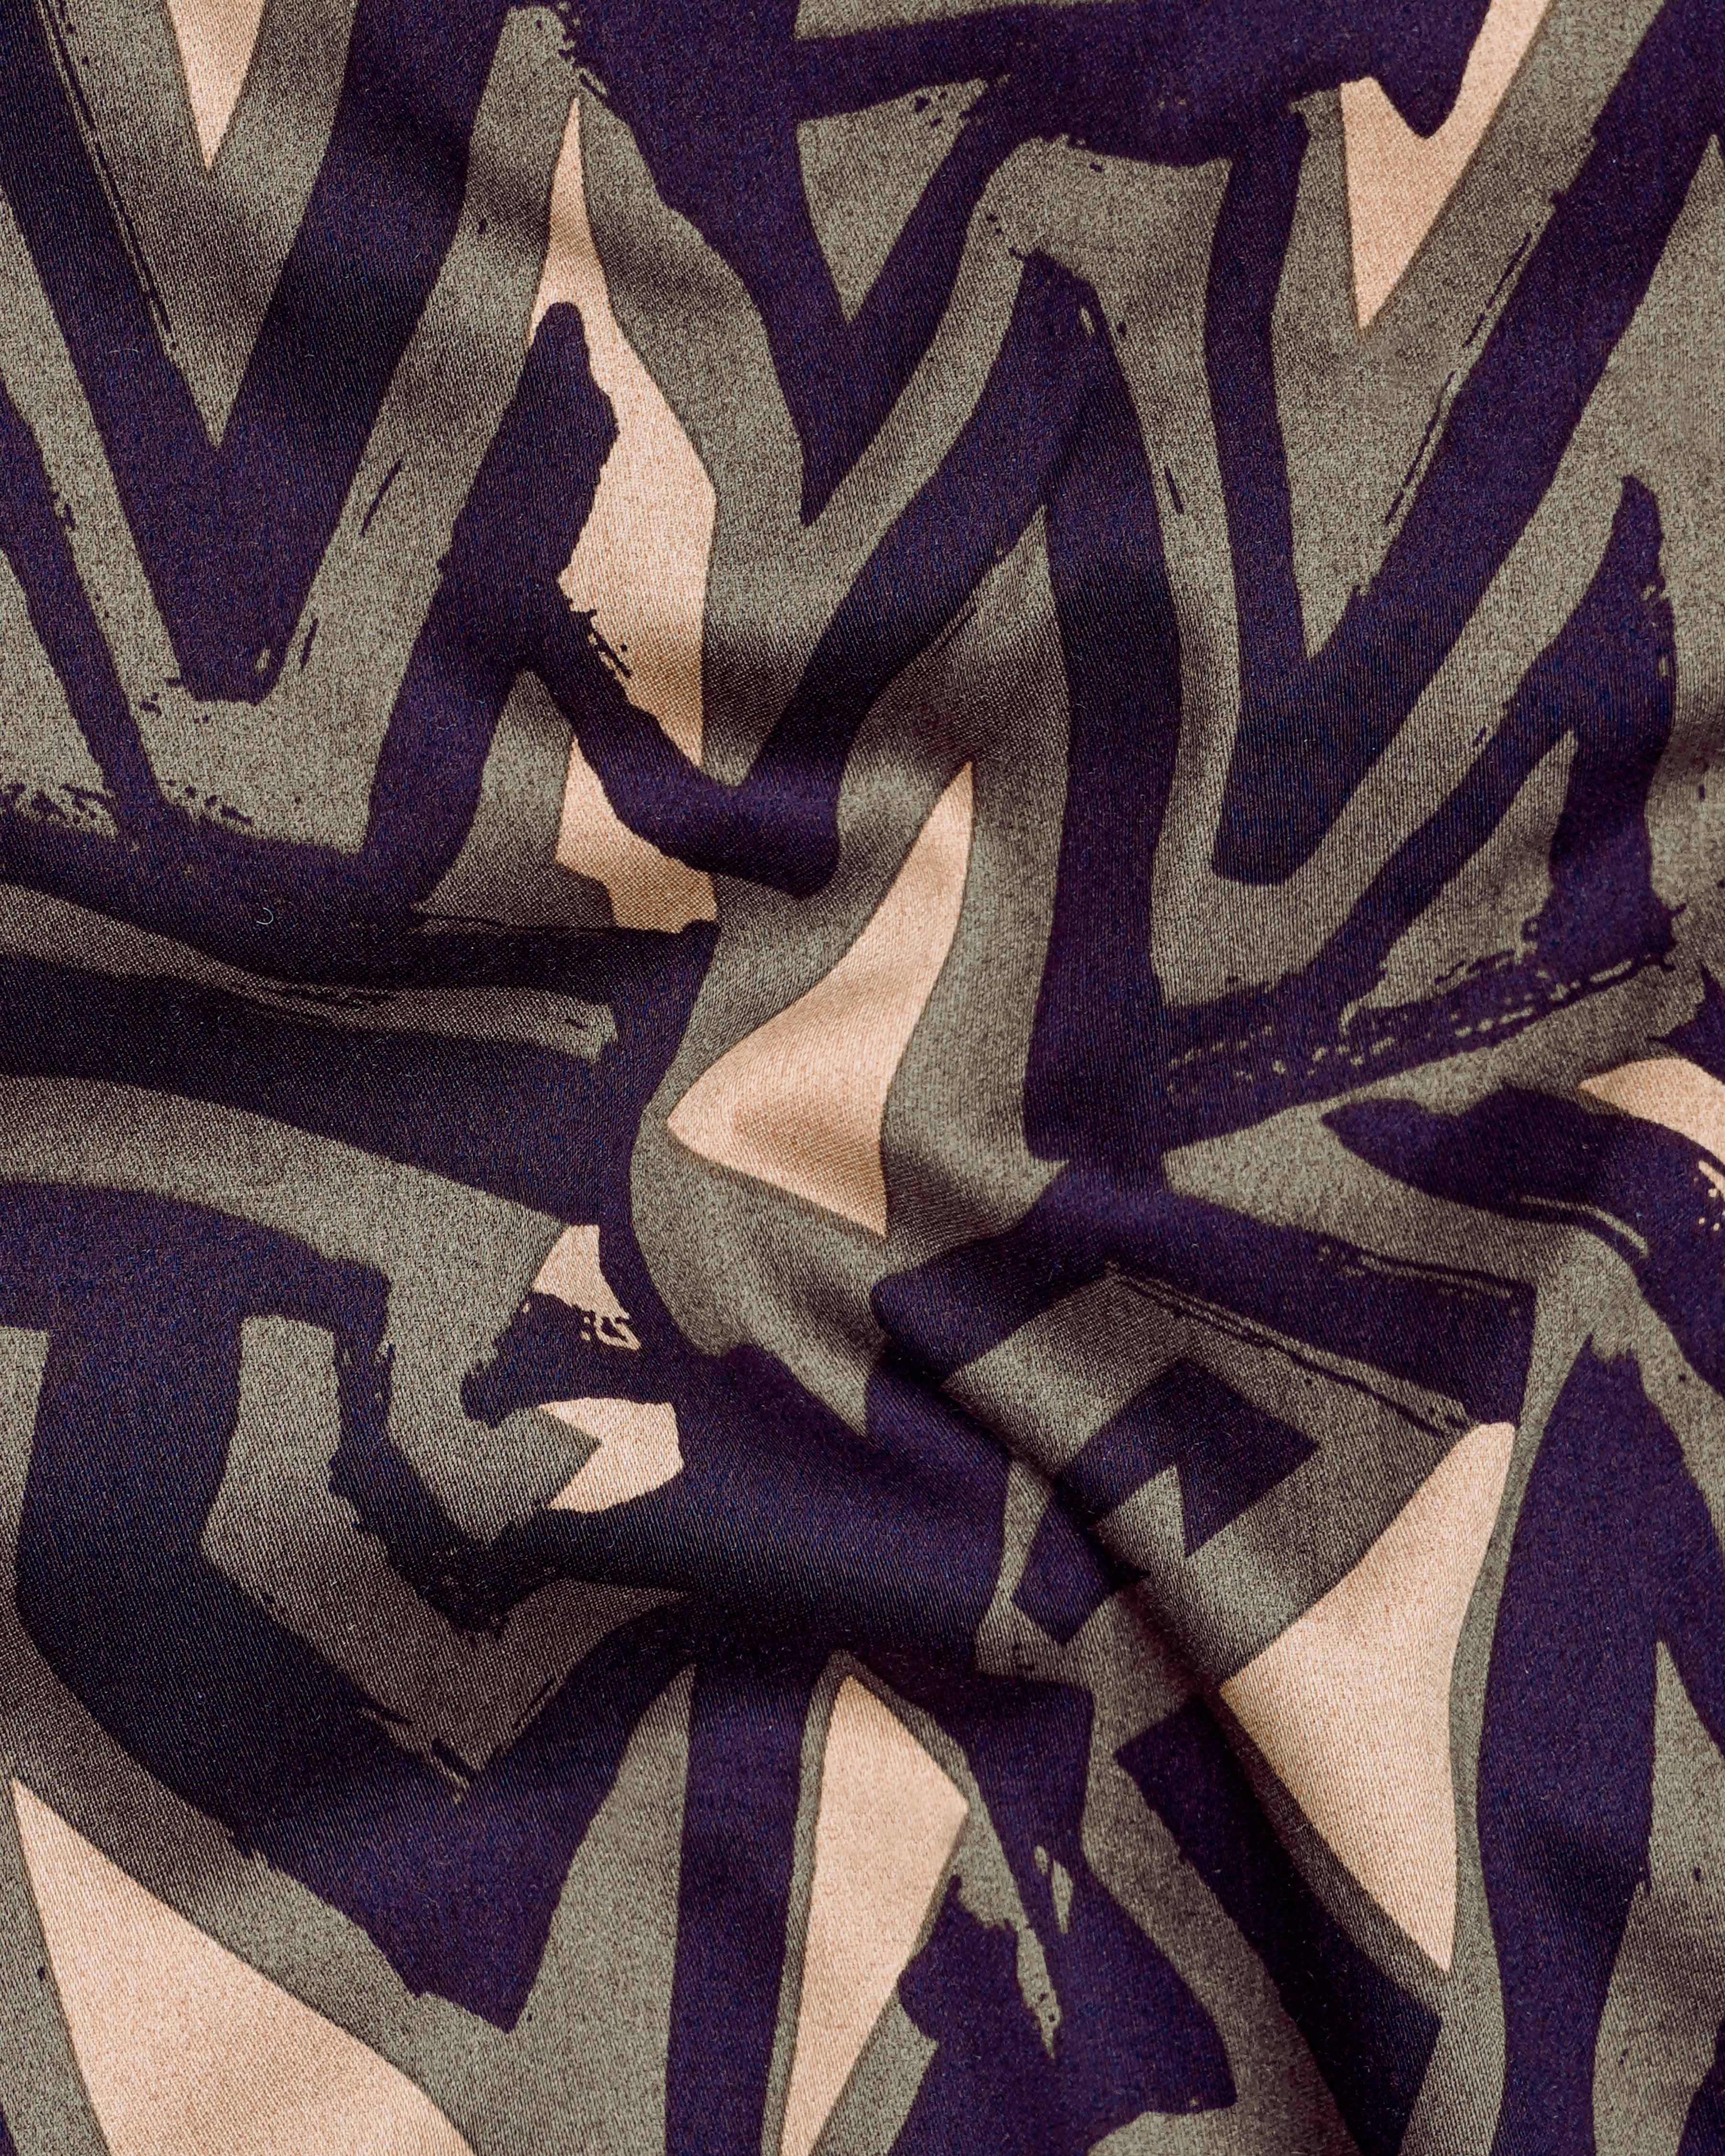 Makara Green and Haiti Purple Printed Super Soft Premium Cotton Shorts SR257-28, SR257-30, SR257-32, SR257-34, SR257-36, SR257-38, SR257-40, SR257-42, SR257-44